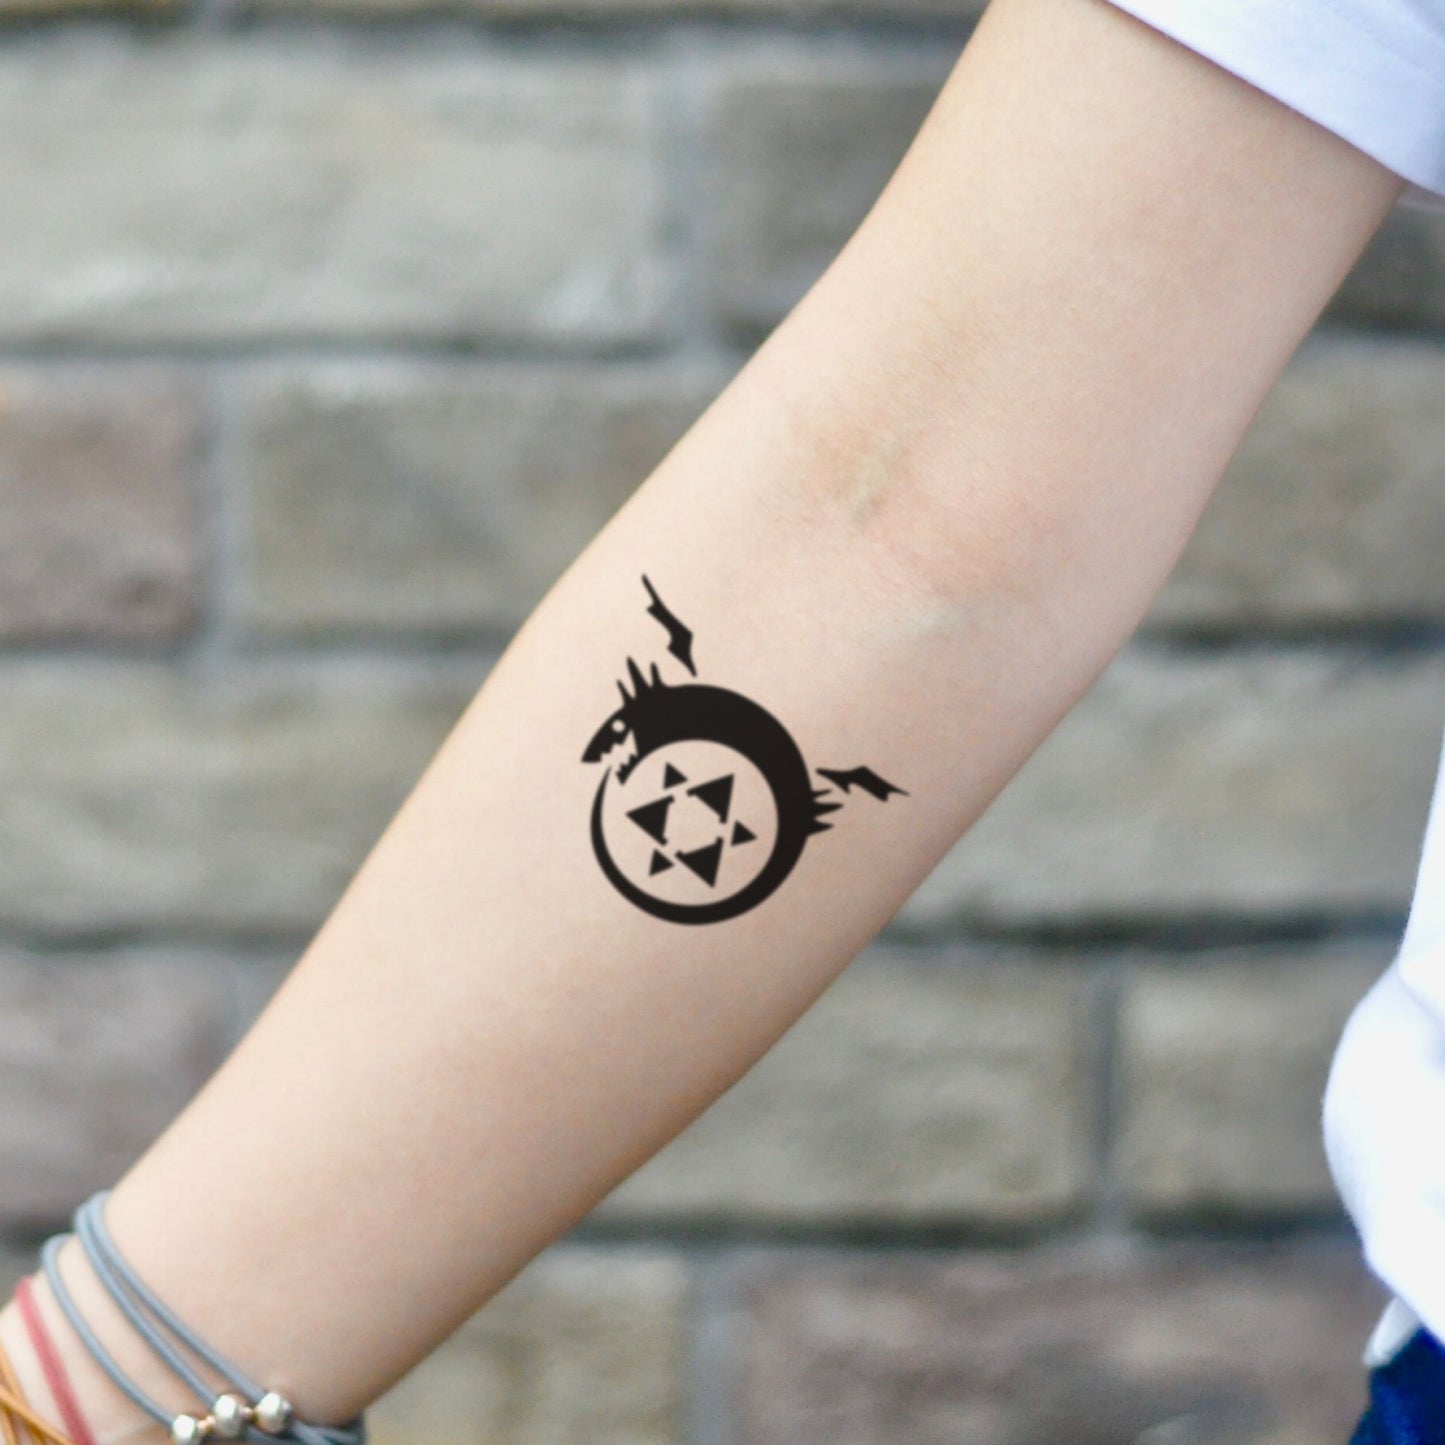 fake small fullmetal alchemist fma homunculus illustrative temporary tattoo sticker design idea on inner arm